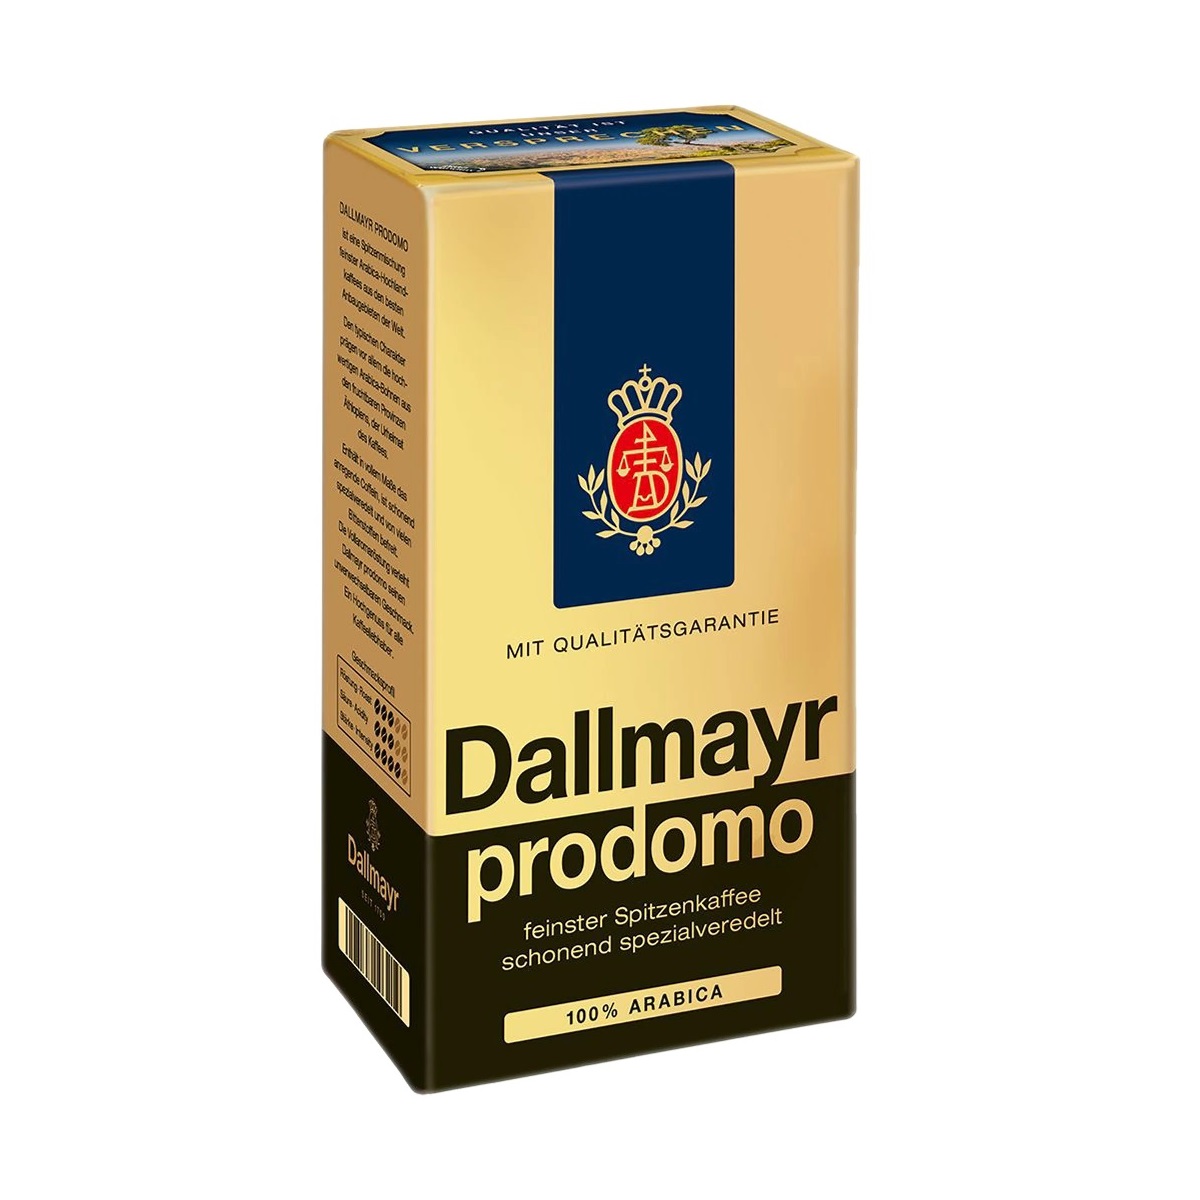 dallmayr prodomo cafea macinata 500g Dallmayr Prodomo 1Kg Angebot